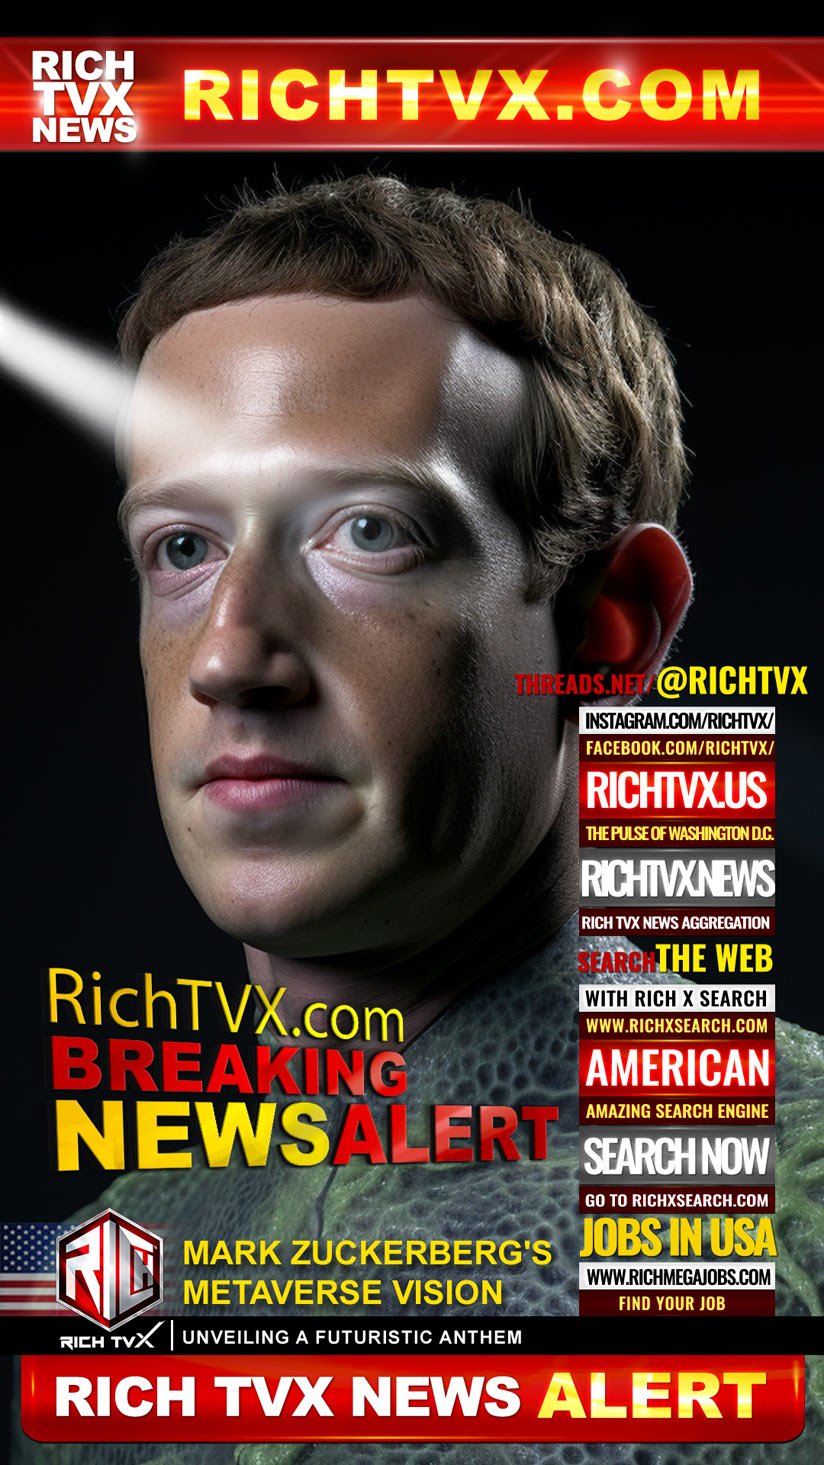 Mark Zuckerberg’s Metaverse Vision: Unveiling a Futuristic Anthem